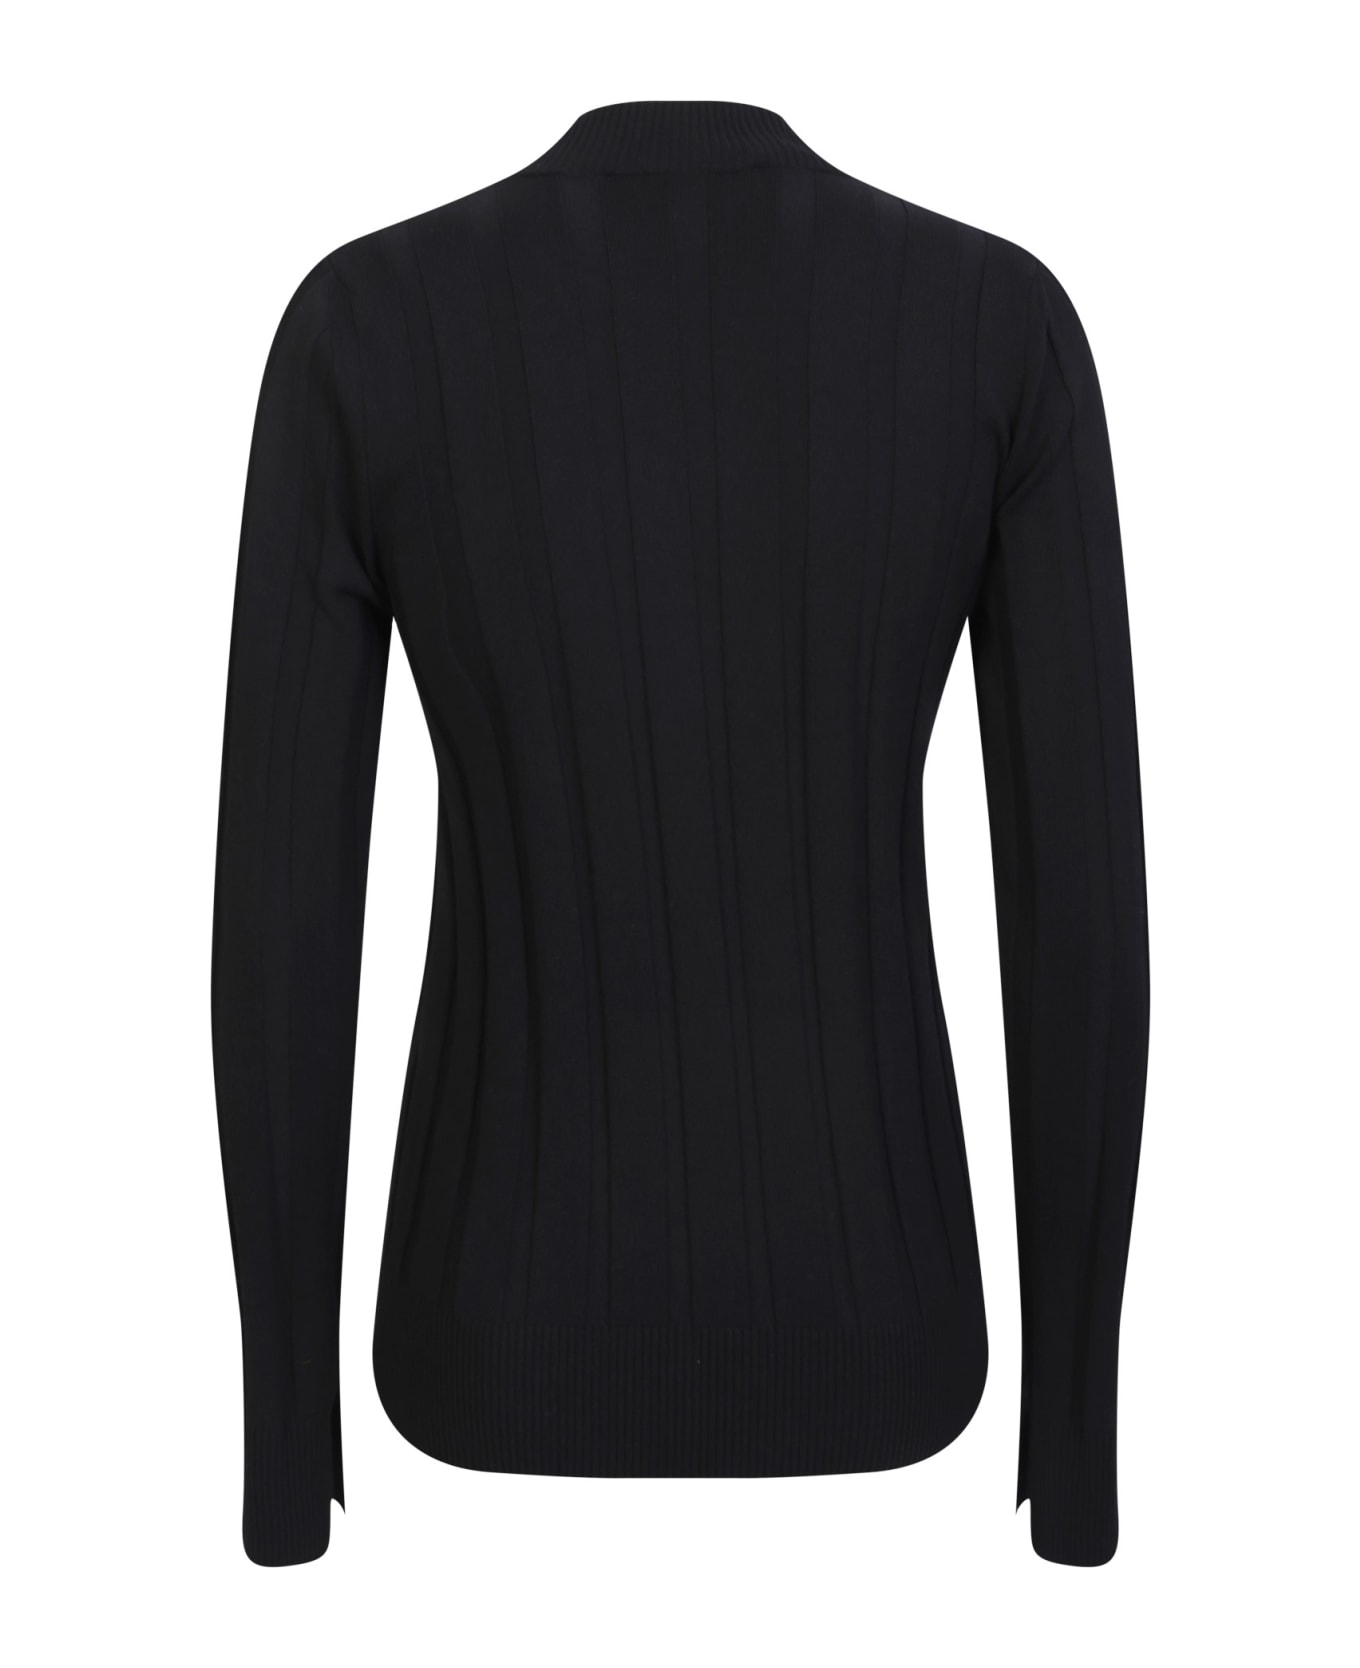 Stella McCartney Asymmetrical Black Ribbed Shirt - Black